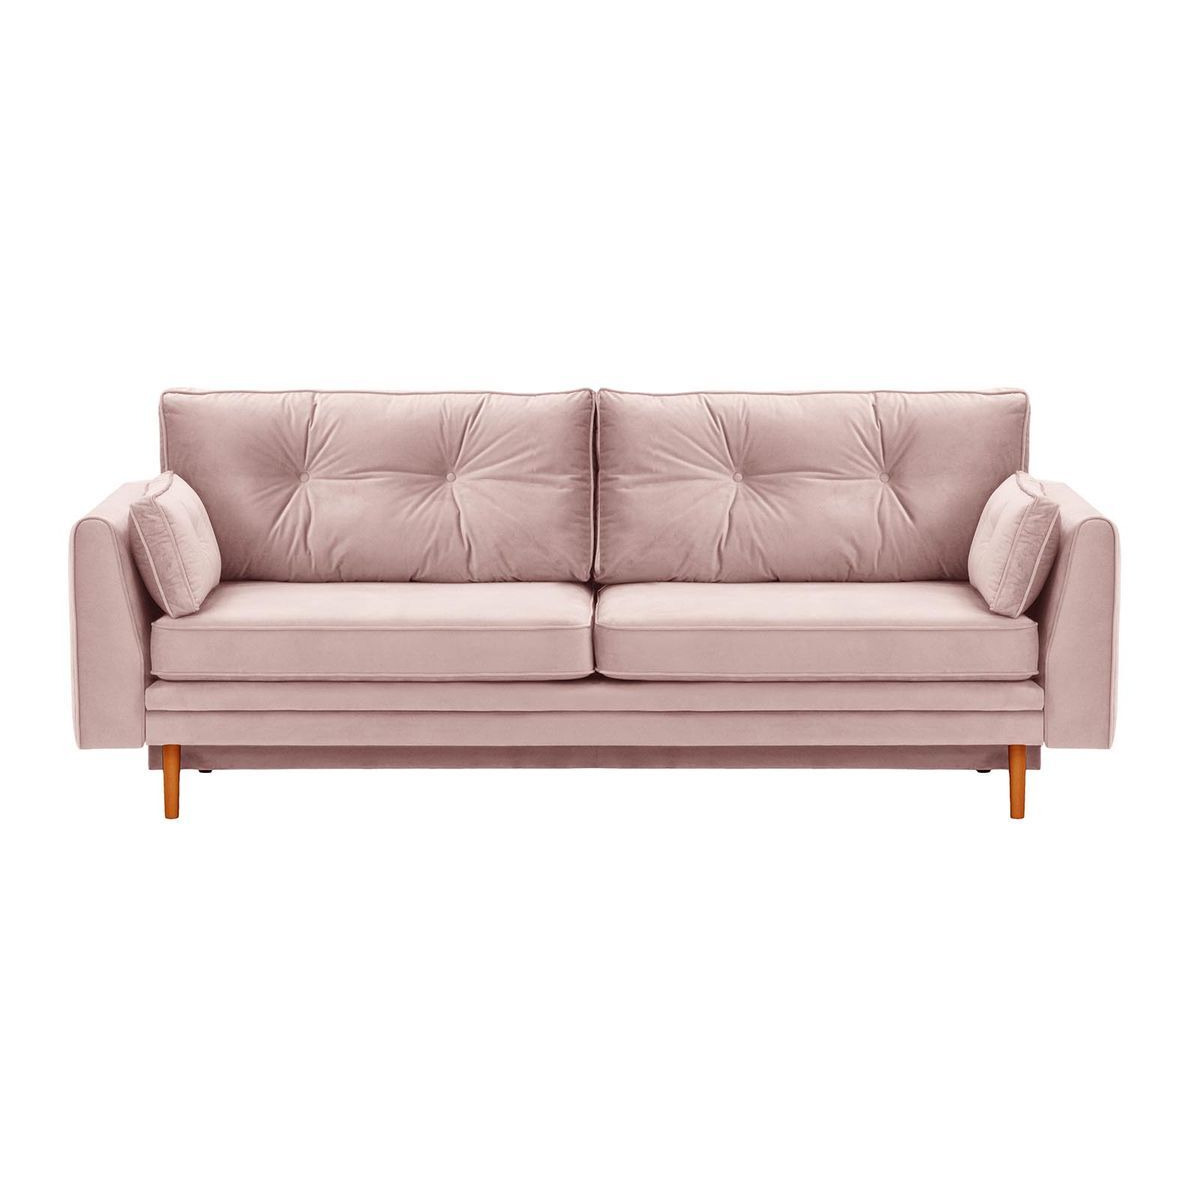 Amelia Sofa Bed with Storage, lilac, Leg colour: aveo - image 1